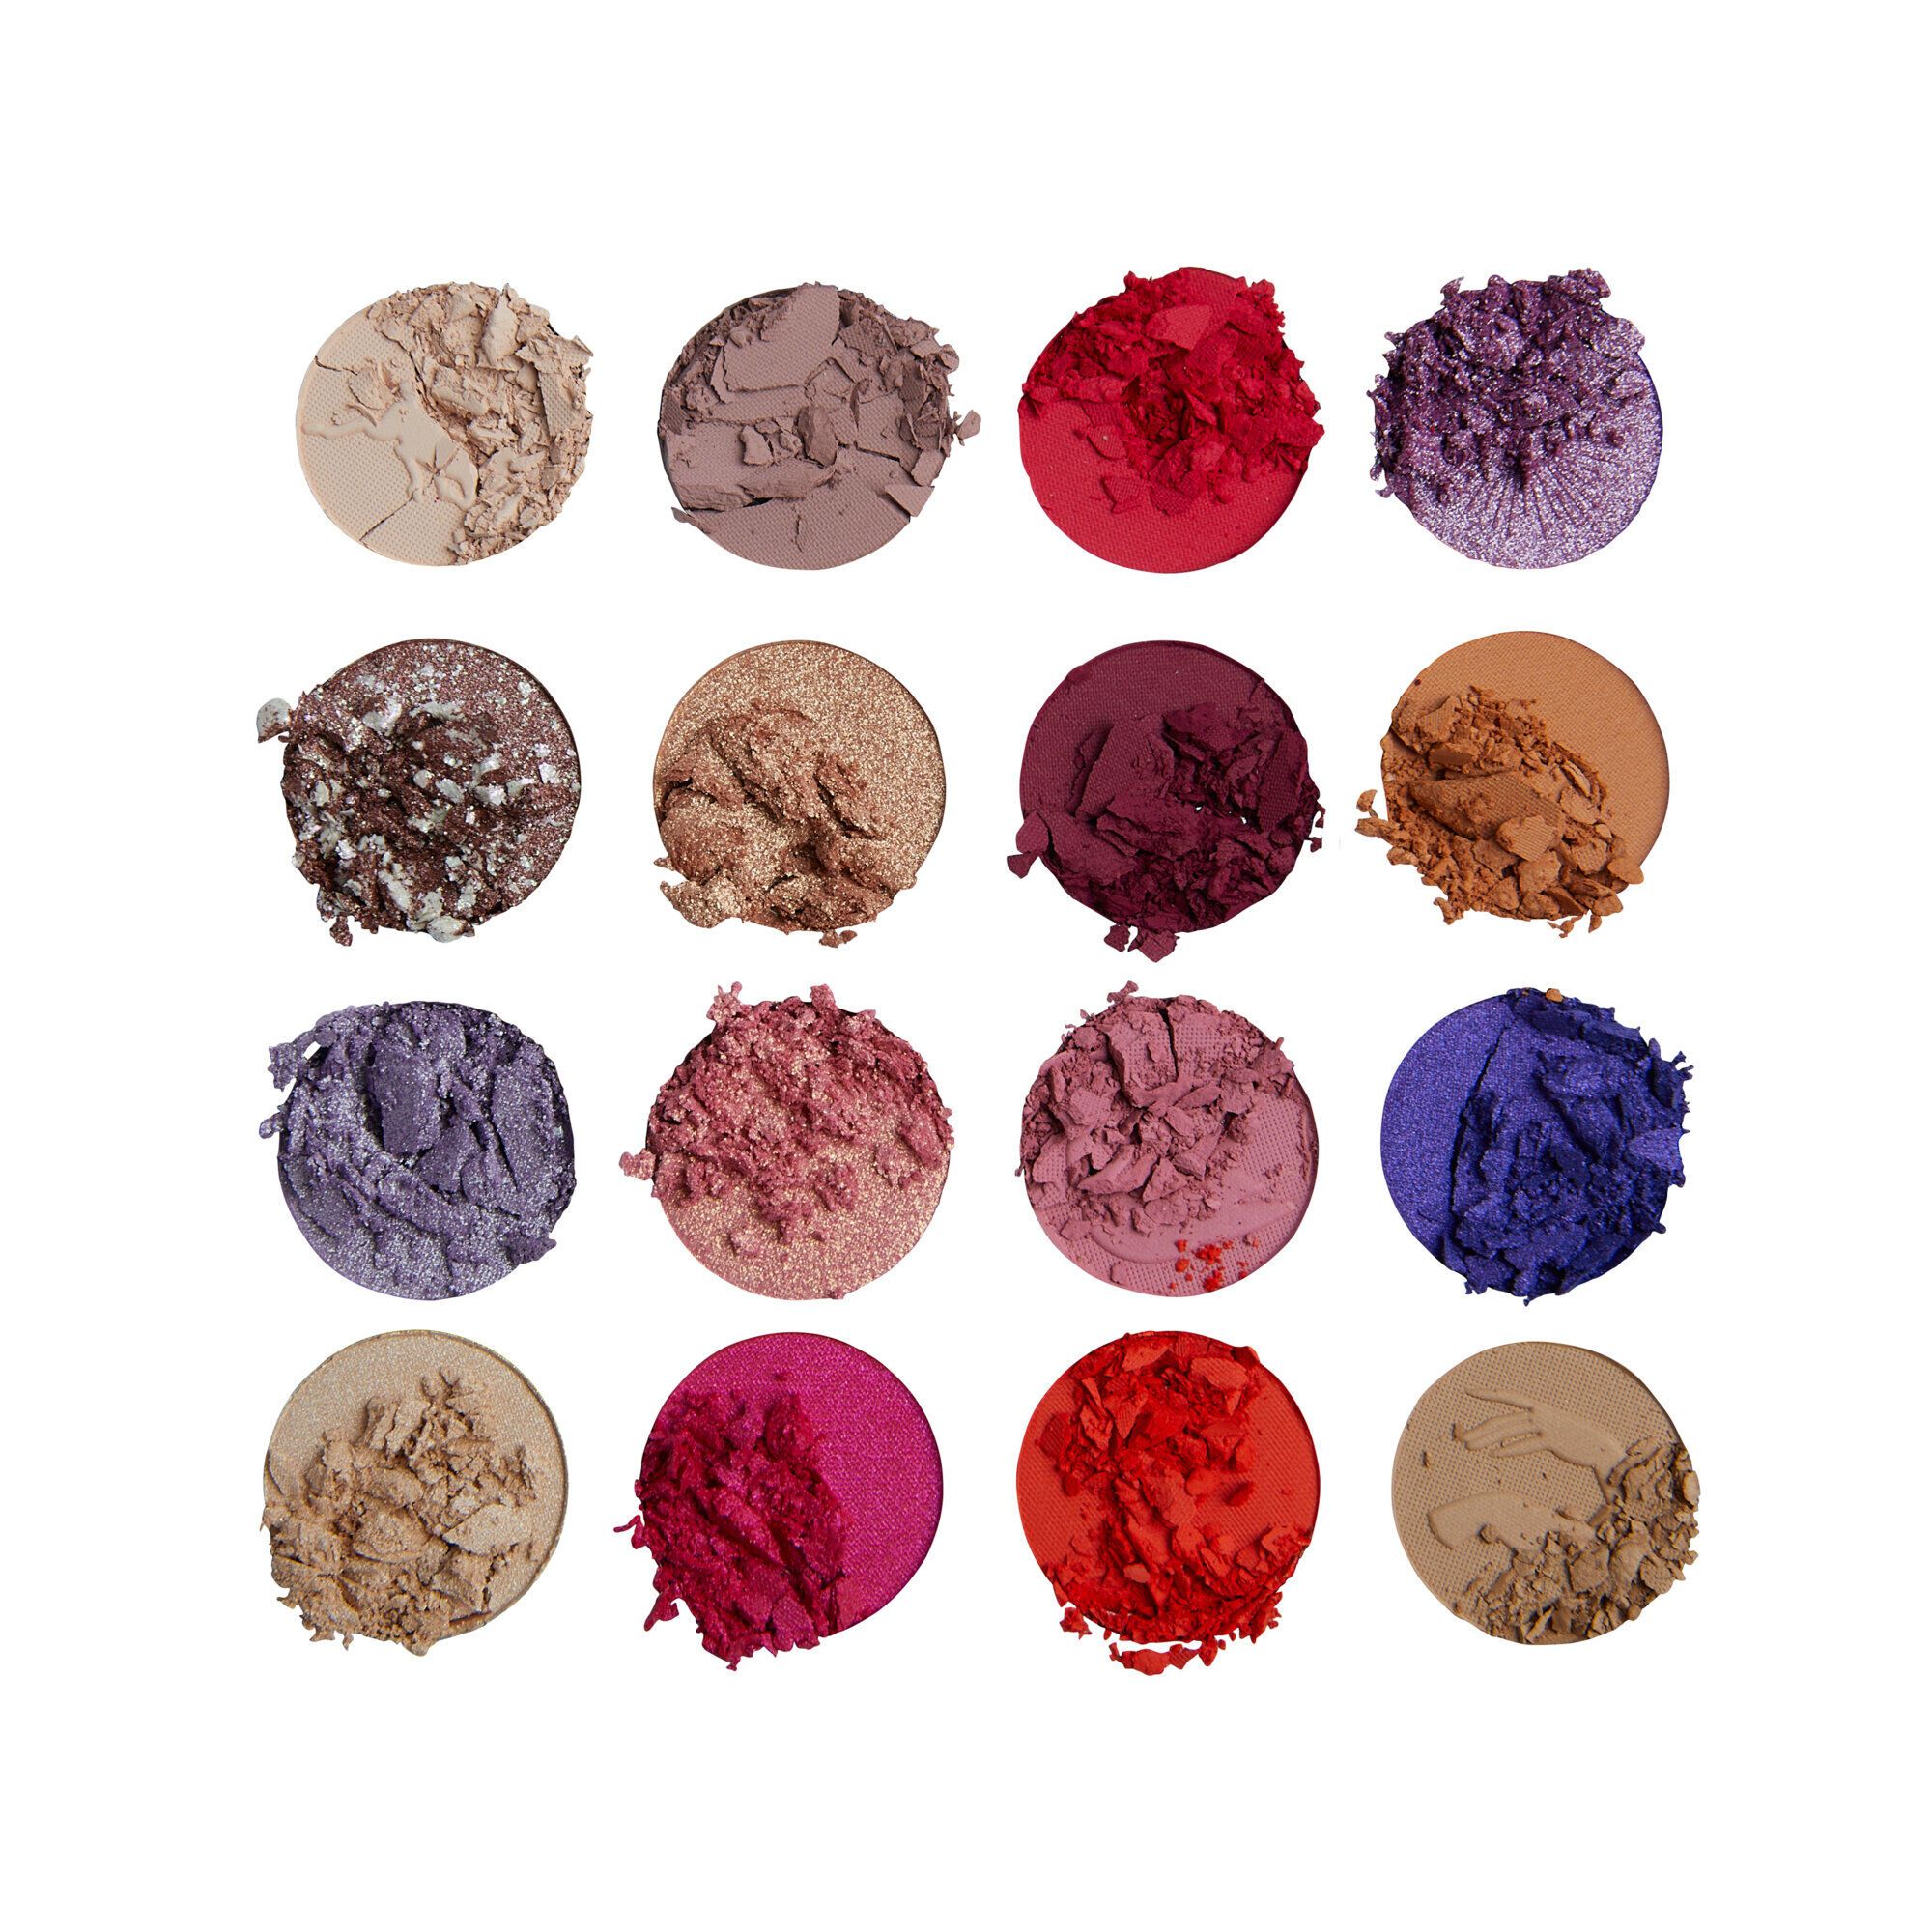 Lidschatten-Palette - The School For Good & Evil x Makeup Revolution - Evers Shadow Palette